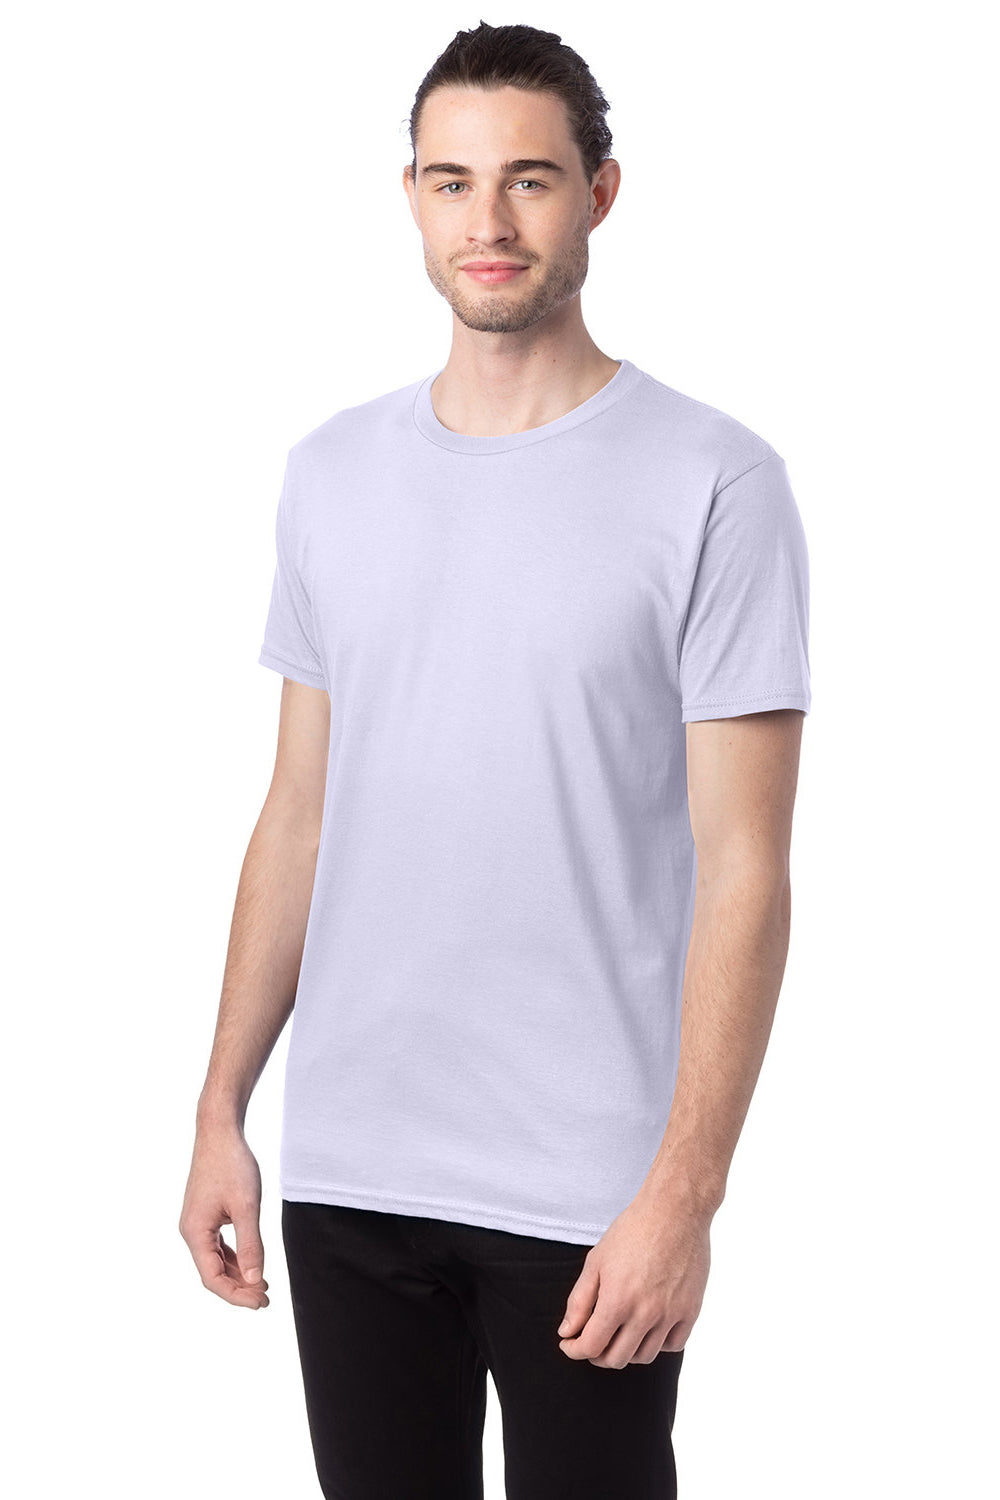 Hanes 4980 Mens Nano-T Short Sleeve Crewneck T-Shirt Urban Lilac Purple 3Q